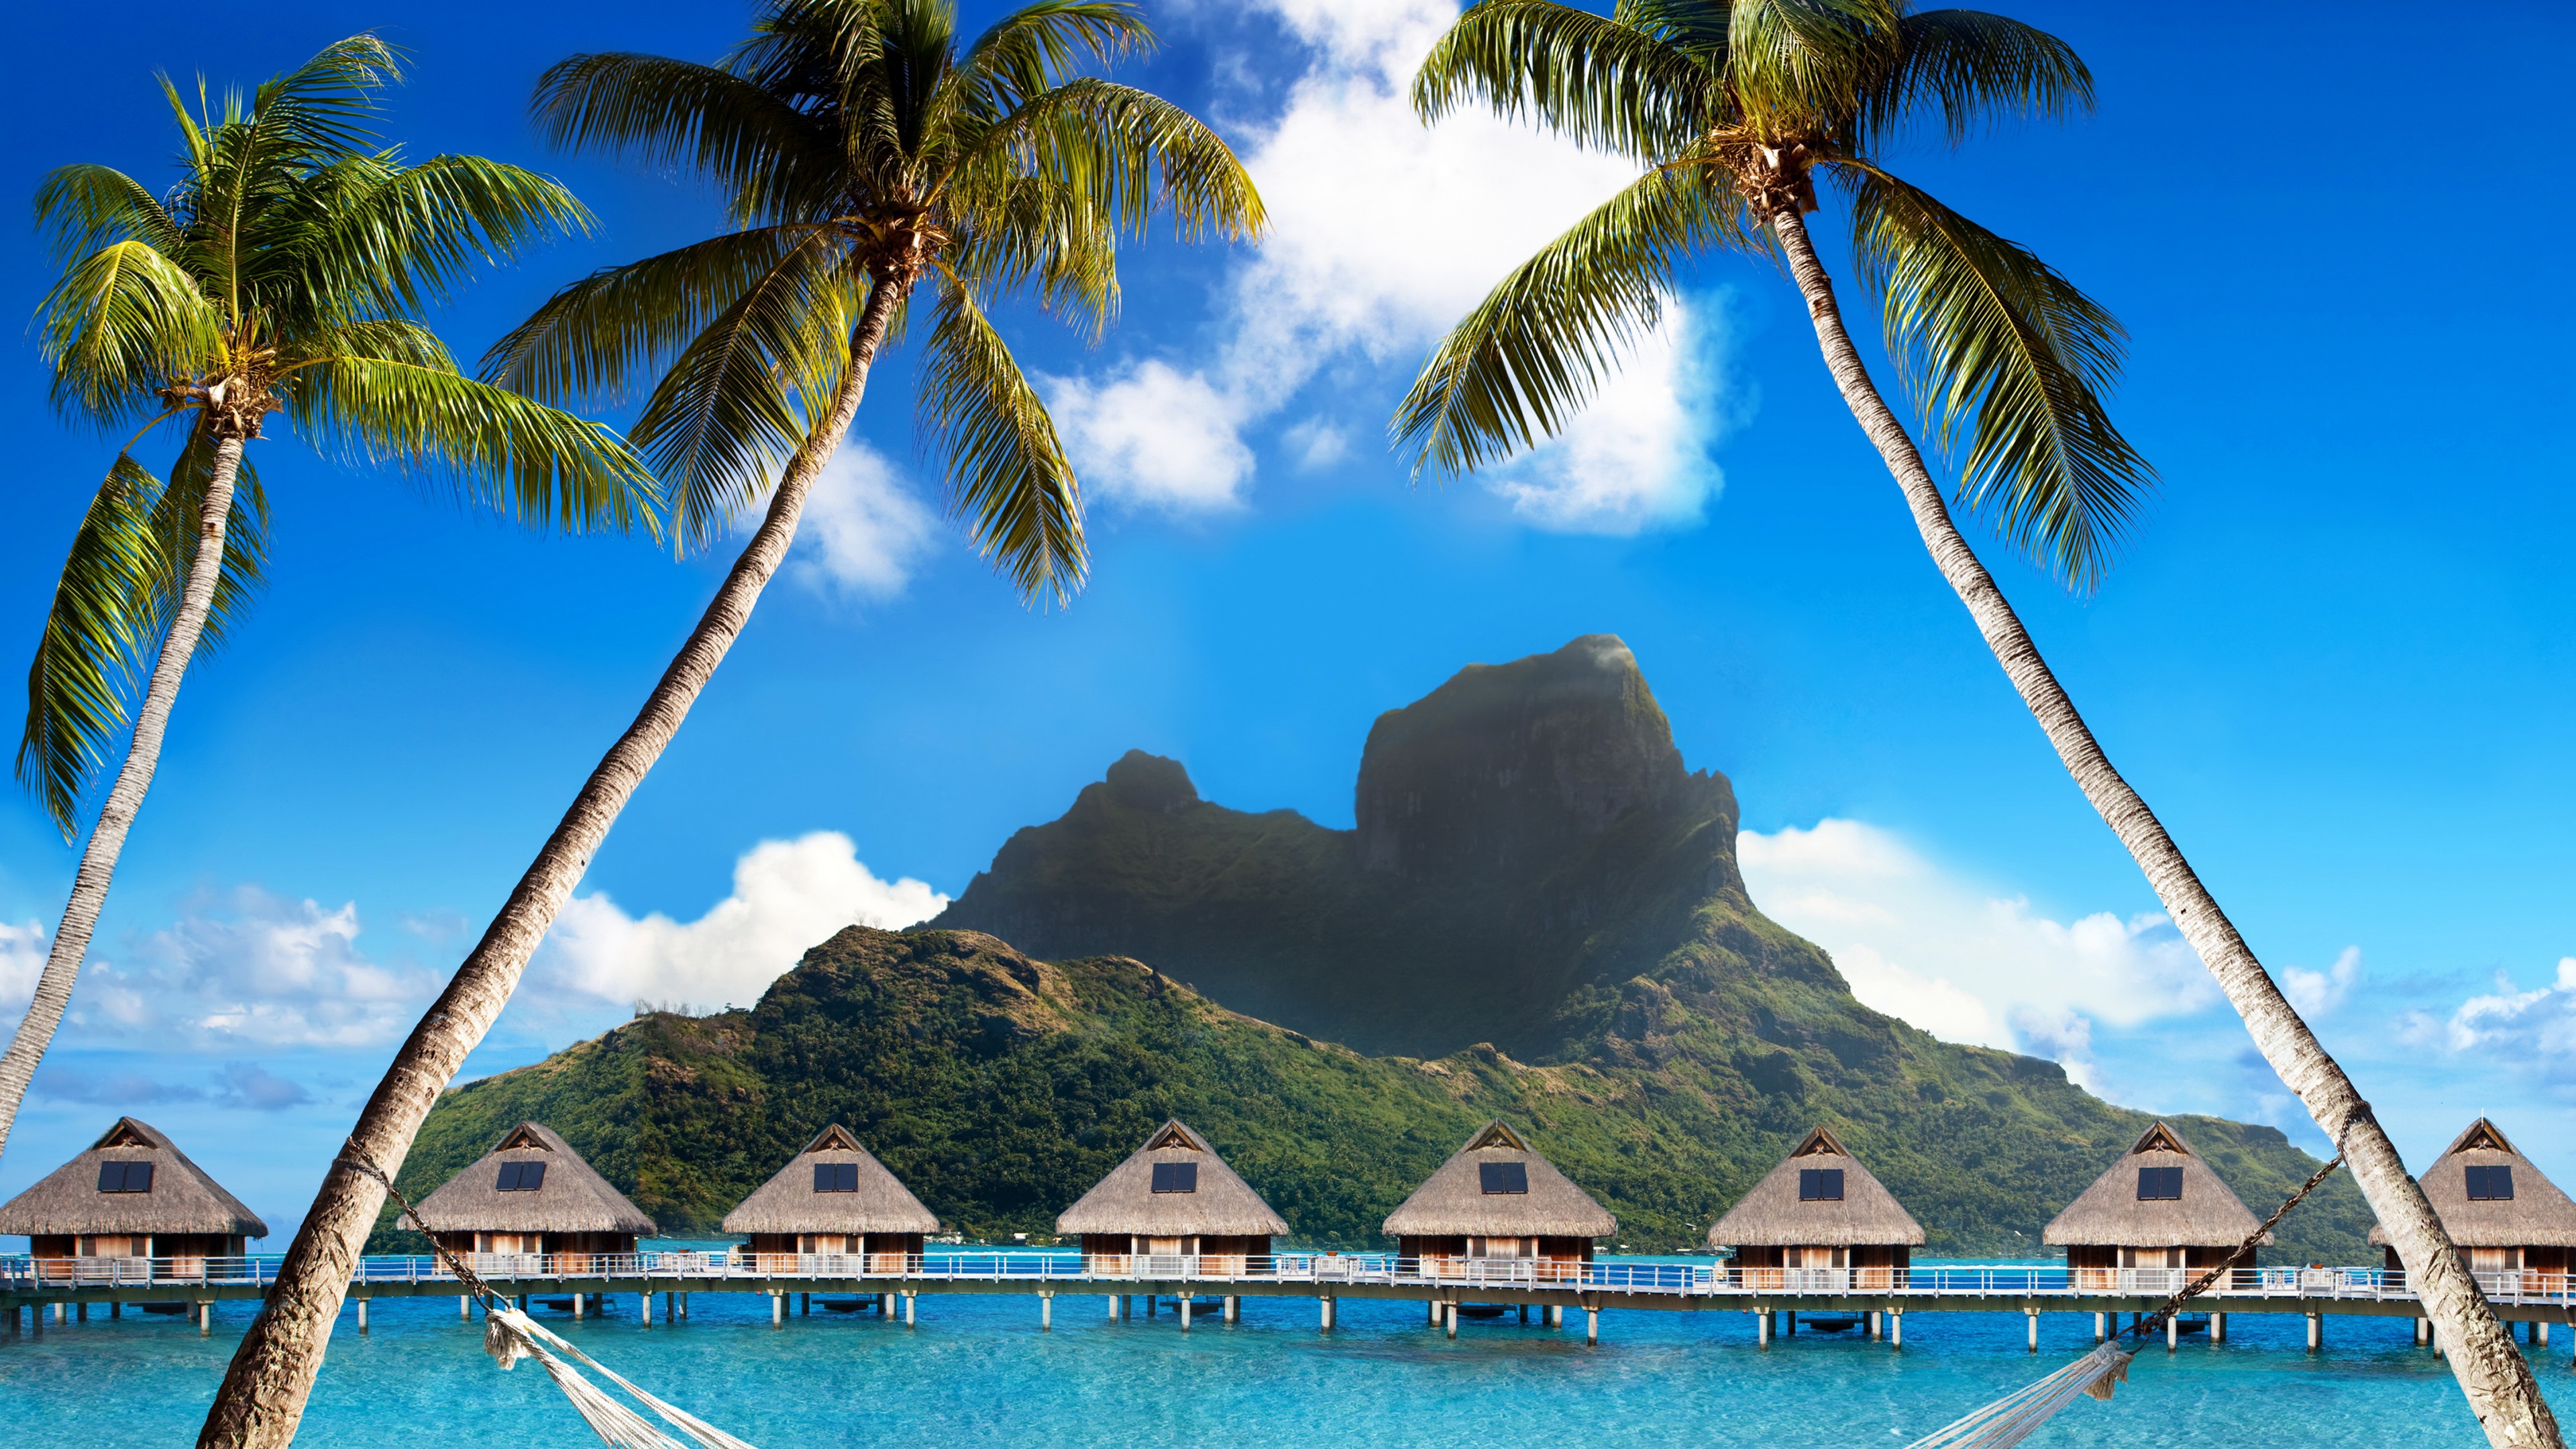 best wallpapers 2017,tropics,resort,vacation,caribbean,swimming pool